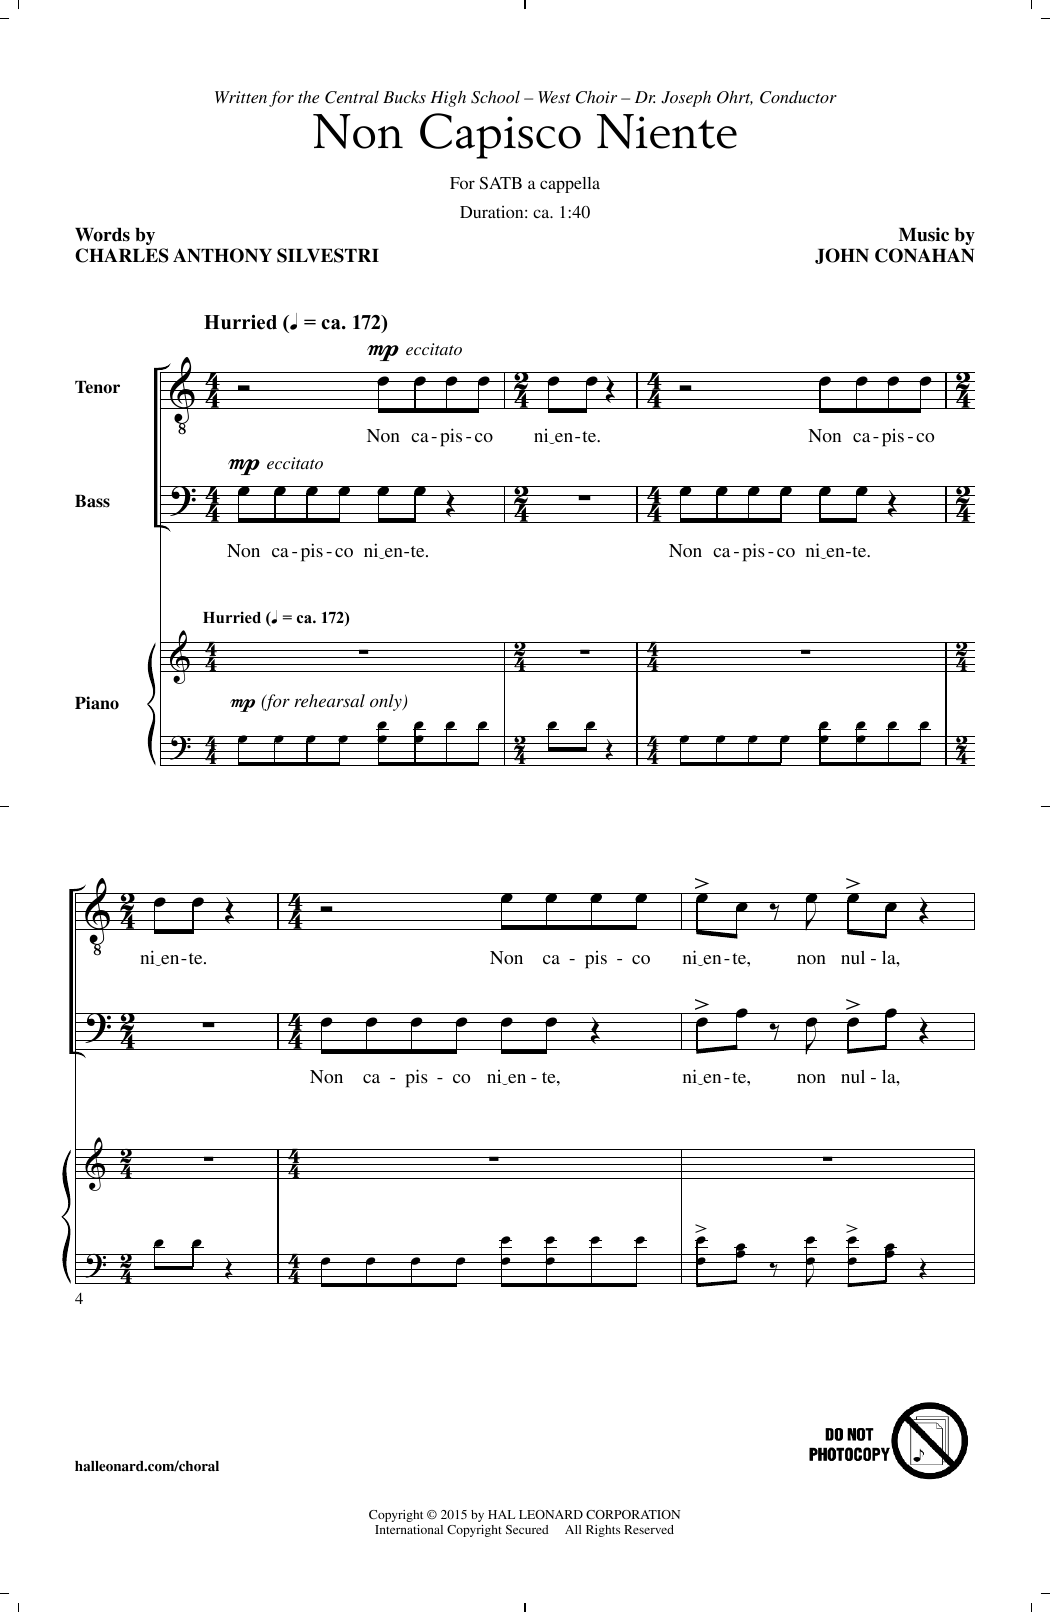 John Conahan Non Capisco Niente Sheet Music Notes & Chords for SATB - Download or Print PDF